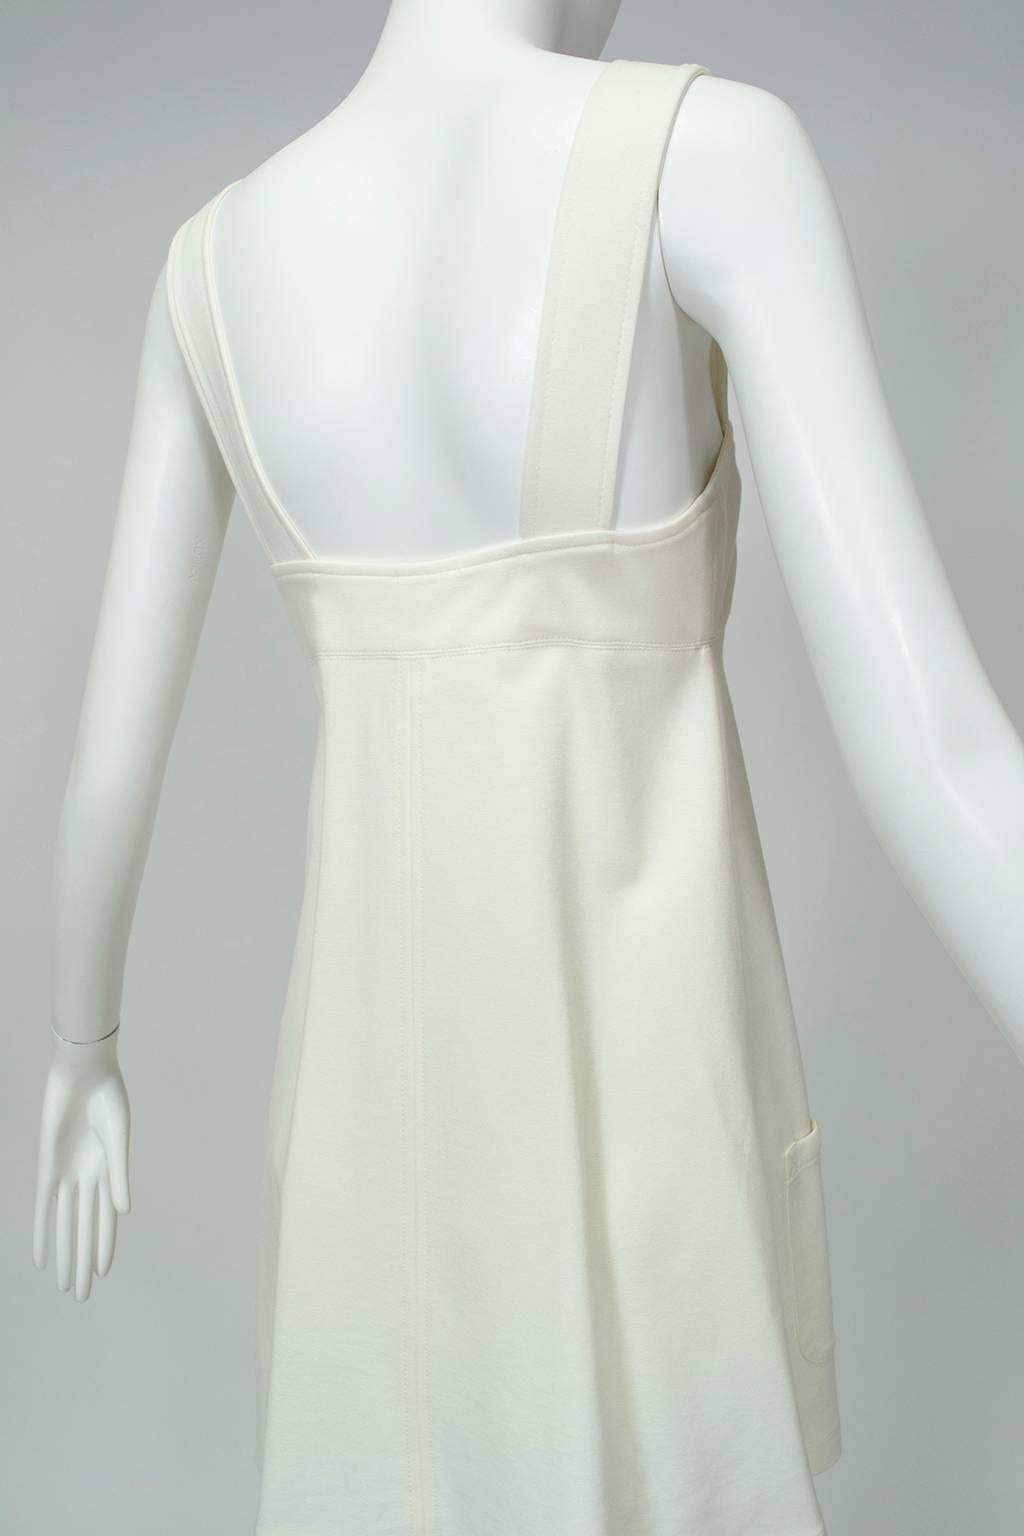 Gray White von Furstenberg Empire Pinafore Tunic Micro Mini Dress - XS, 21st Century